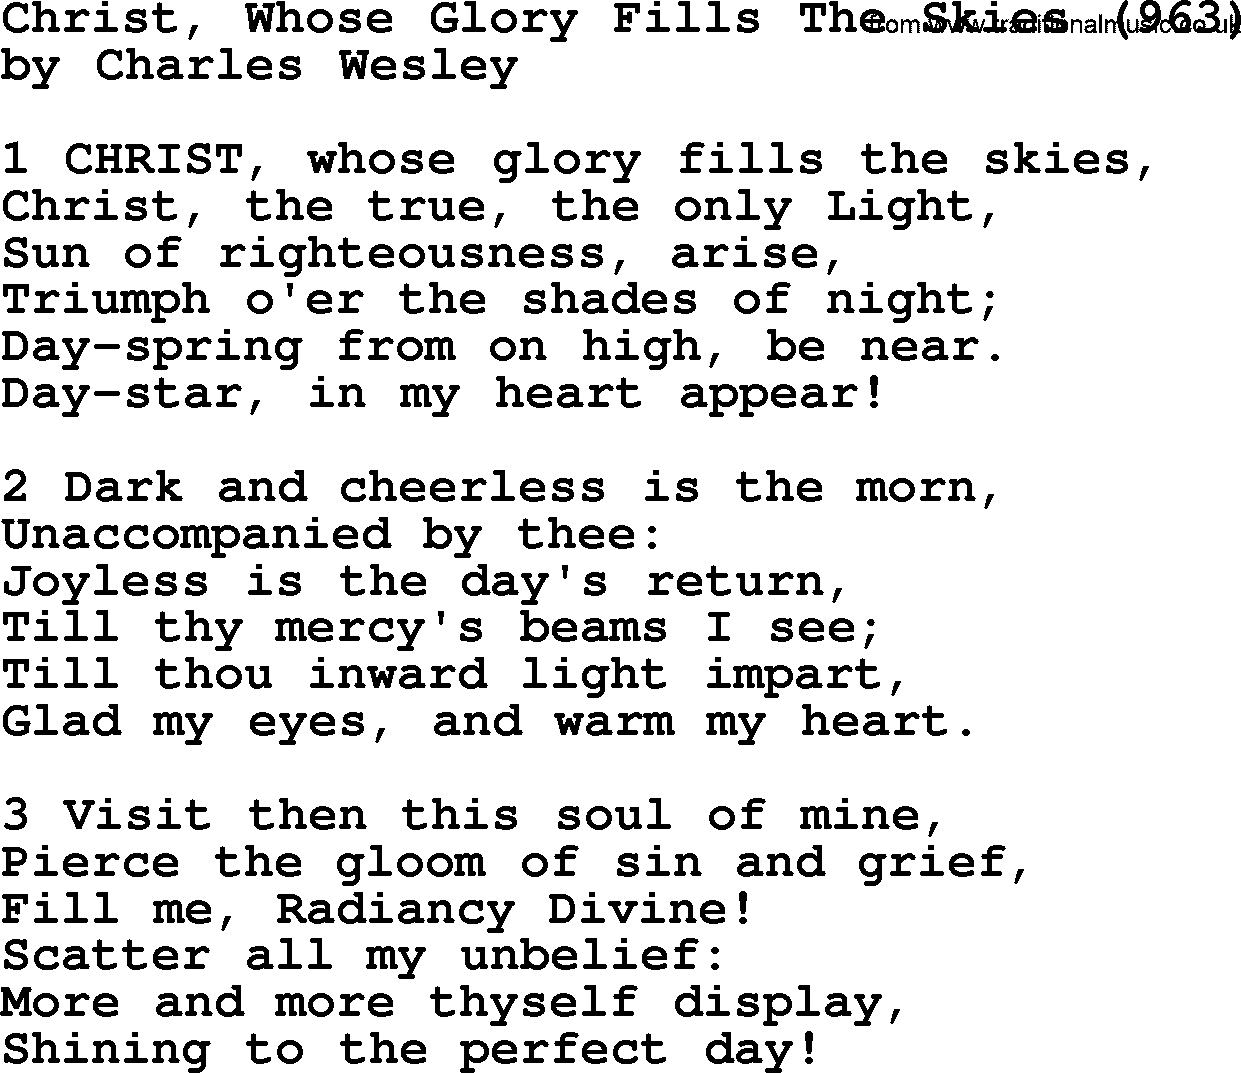 Charles Wesley hymn: Christ, Whose Glory Fills The Skies (963), lyrics